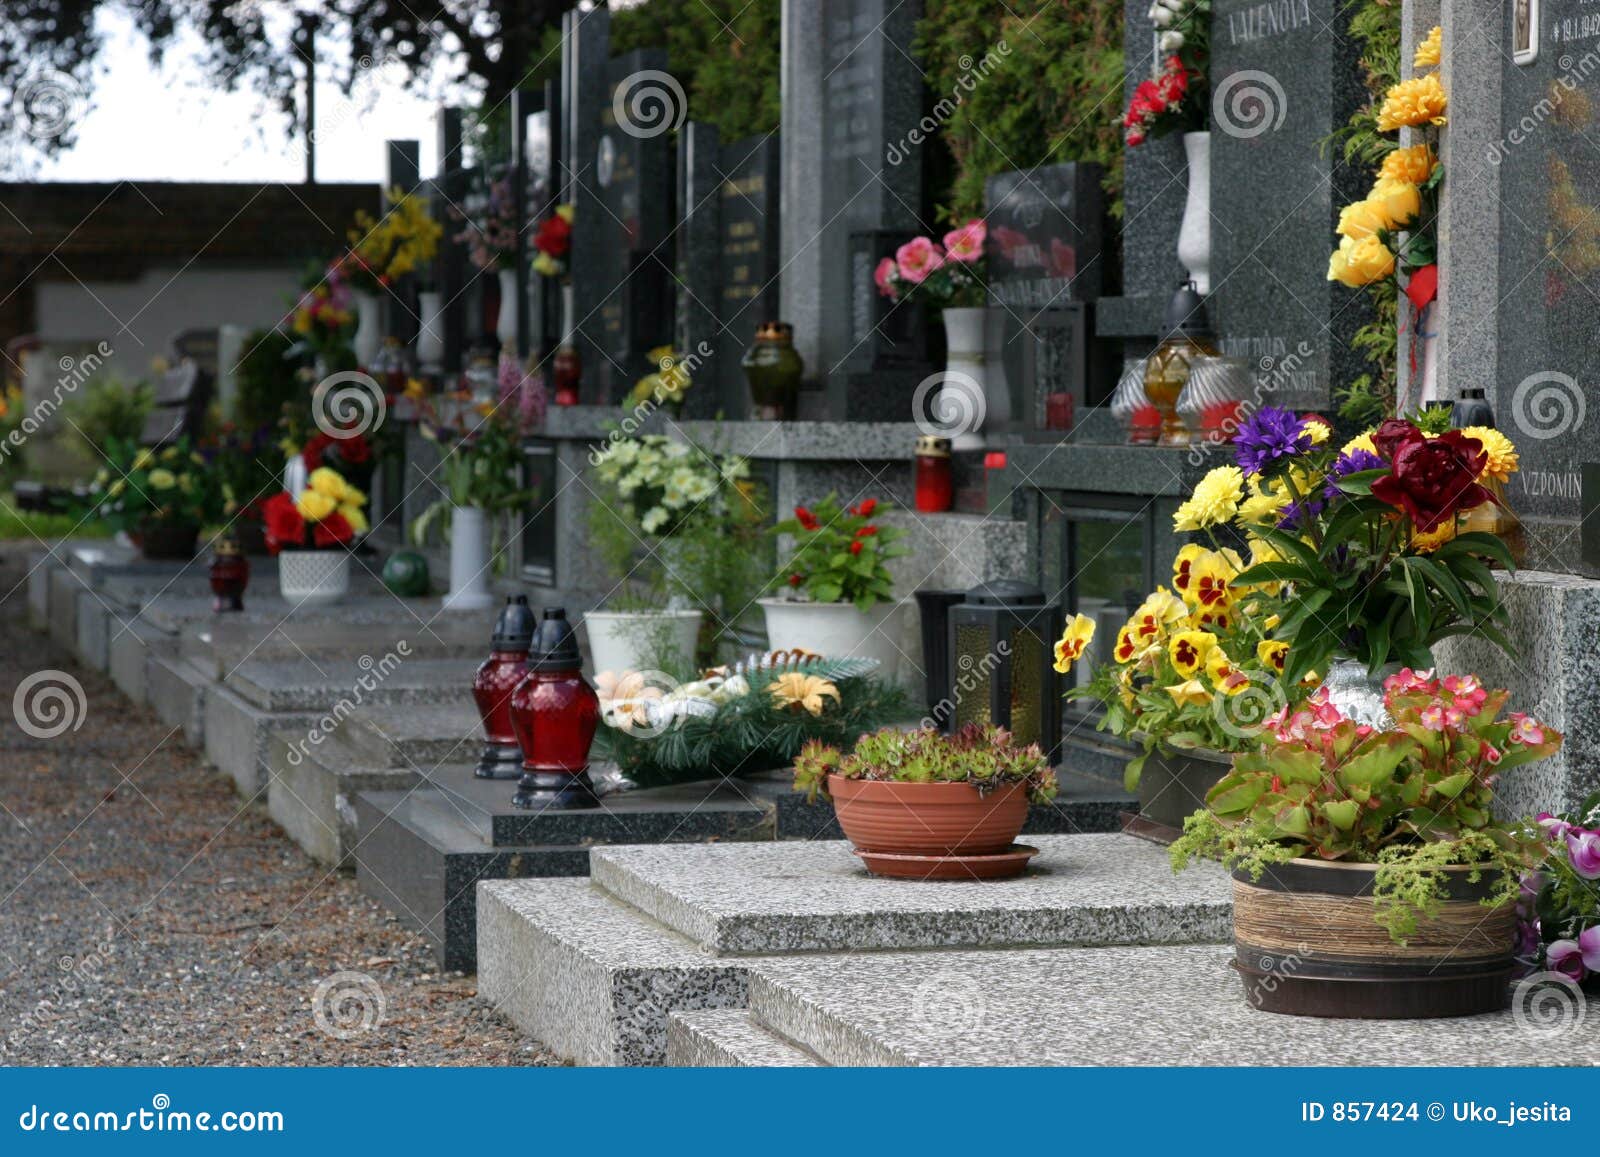 Цветы на кладбище спб. Цветы в горшках на кладбище. Горшки с цветами на кладбище. Вазоны с цветами на кладбище. Живые цветы в горшках на кладбище.